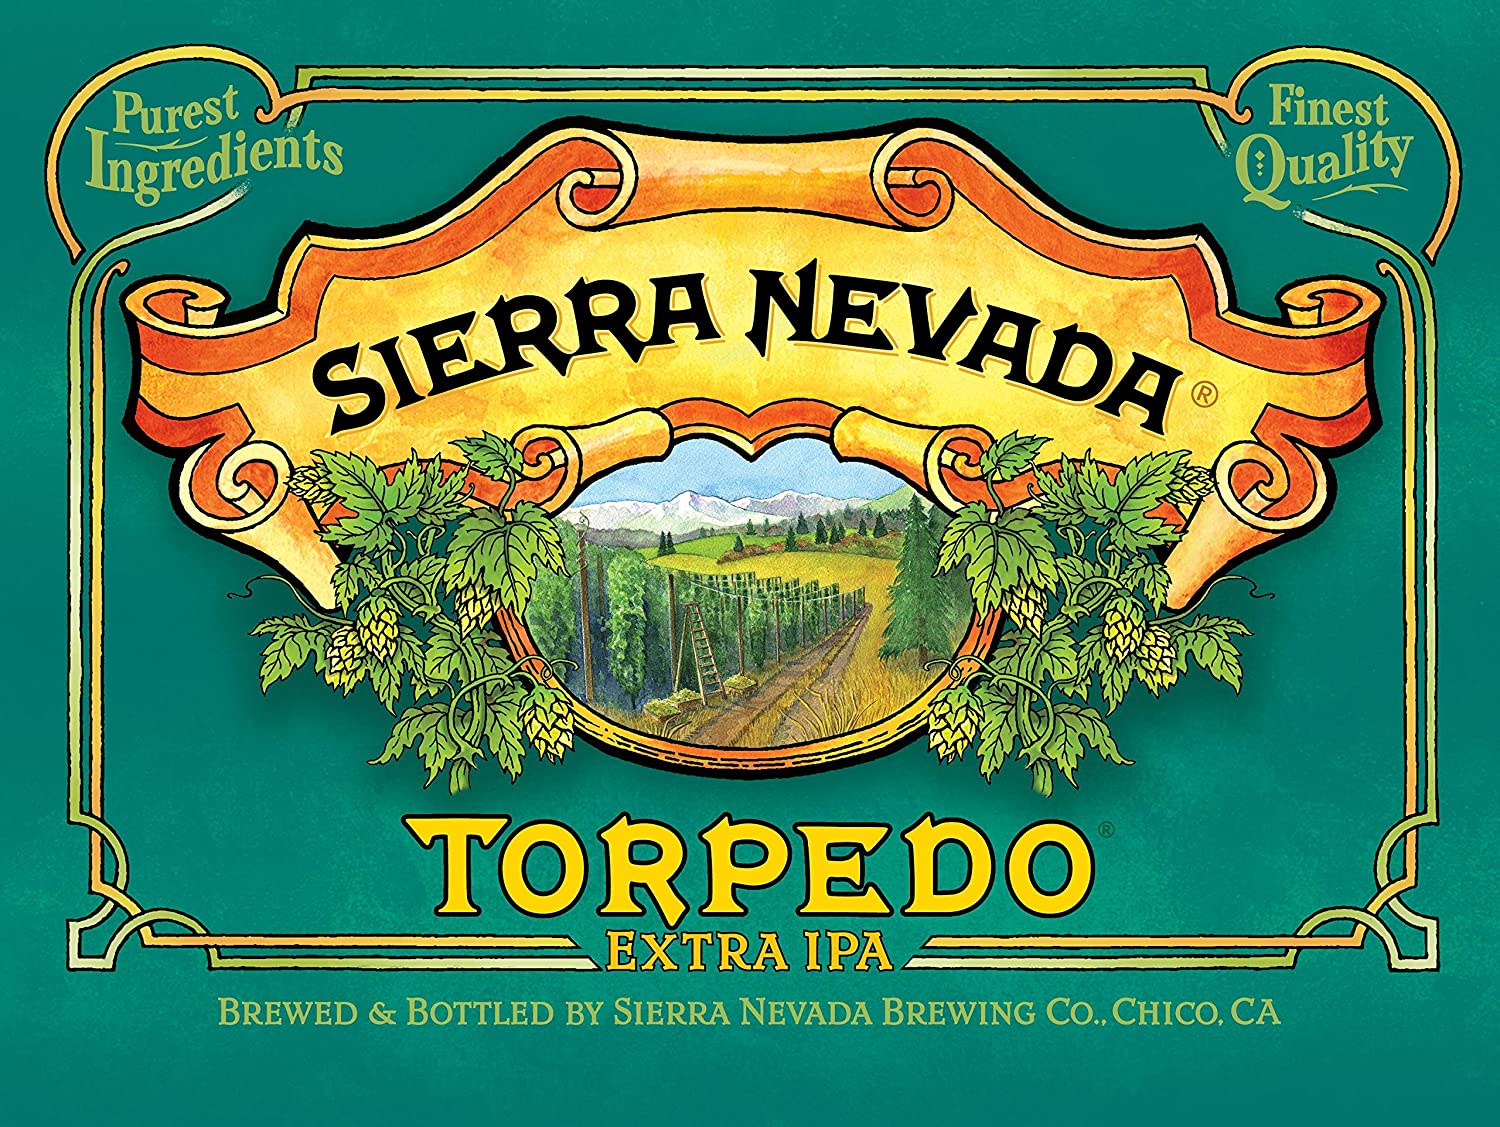 Sierra Nevada Brewing Co. Torpedo IPA Paket 12x 0,355l Flasche + Glas